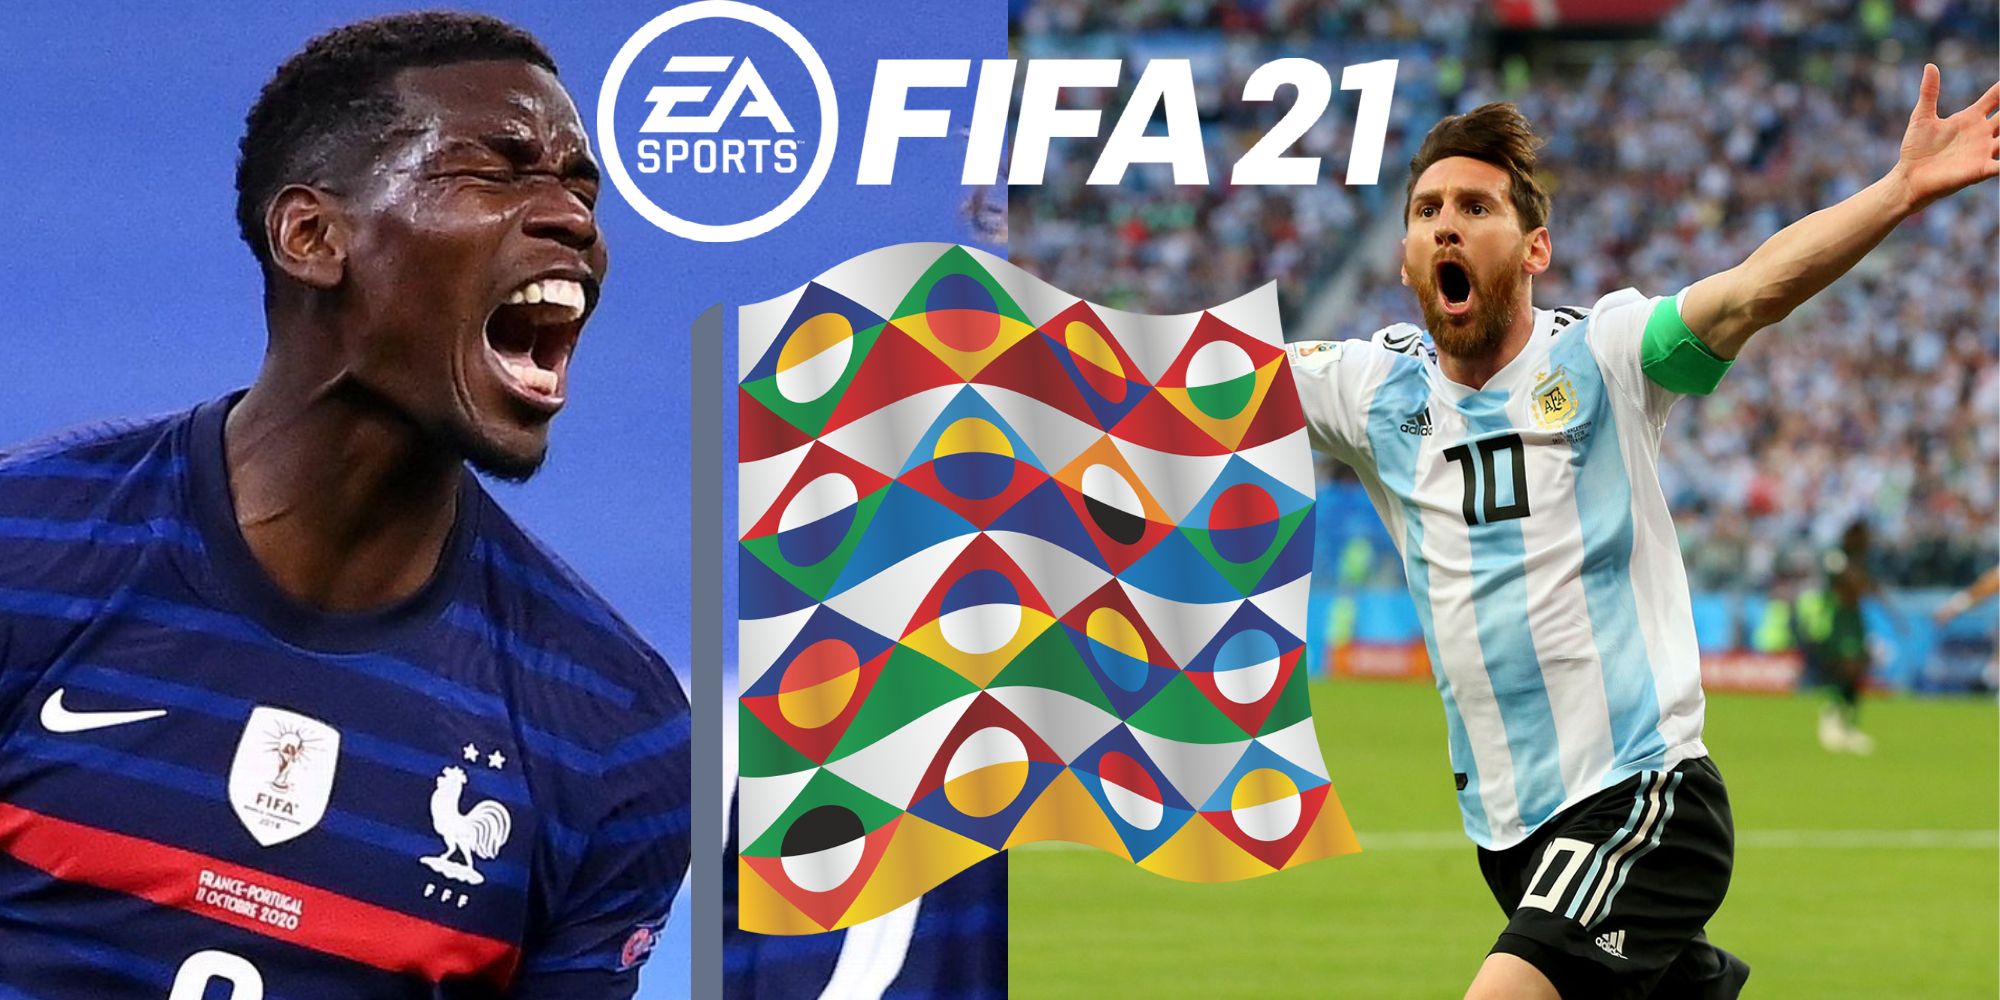 Best 5 star teams FIFA 21: The top 10 teams to choose